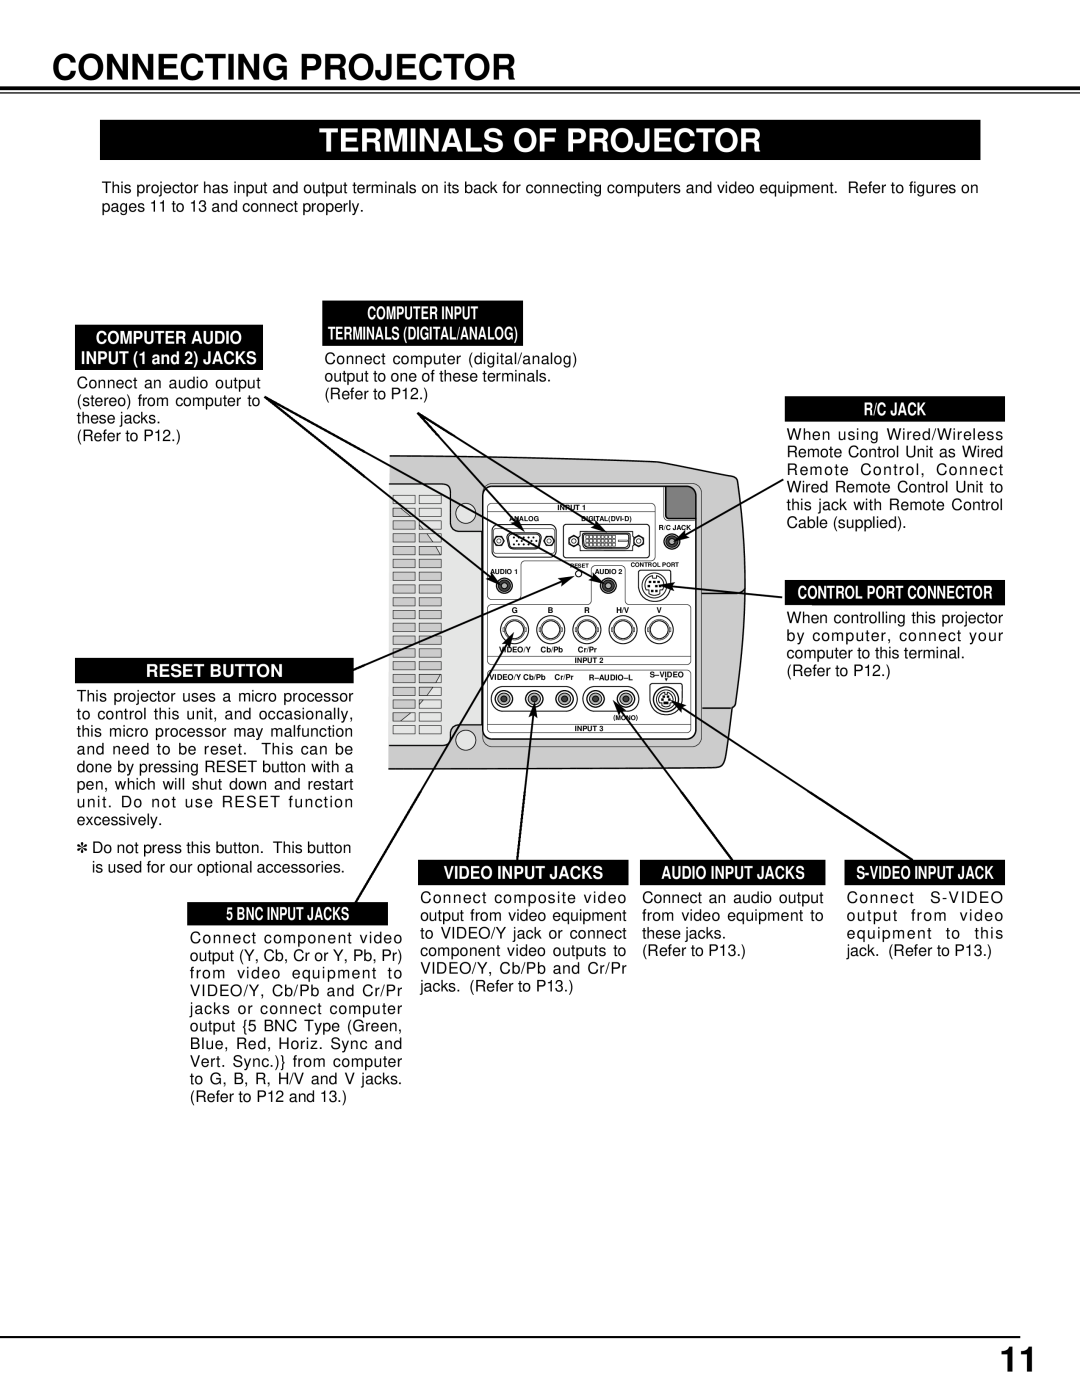 BOXLIGHT CINEMA 20HD manual Connecting Projector, Terminals Of Projector, Audio Input Jacks 